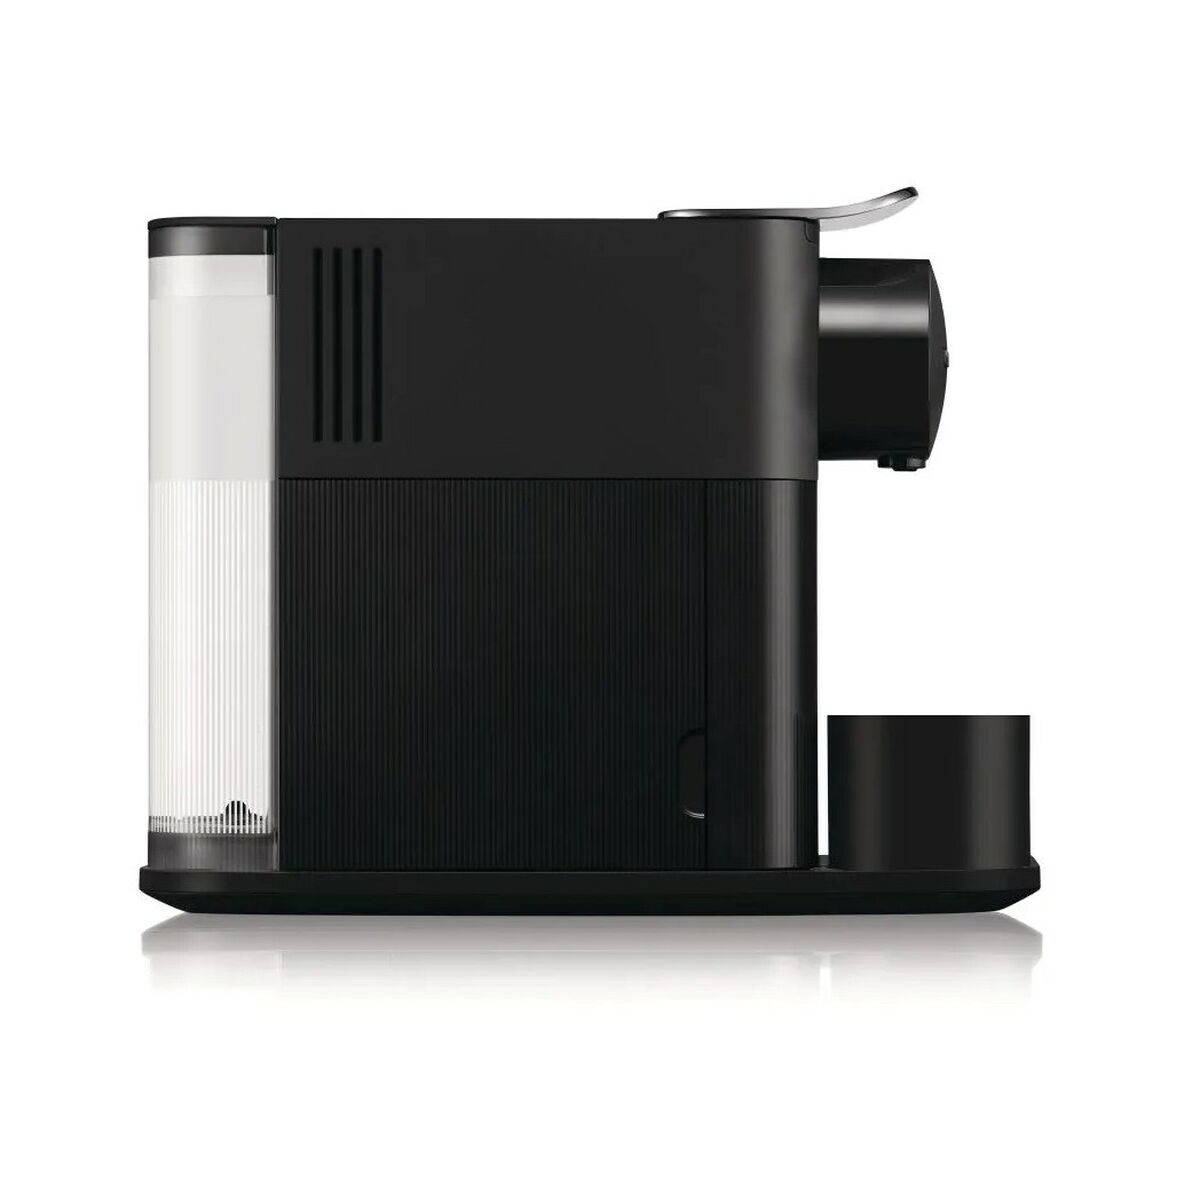 Superautomatische Kaffeemaschine DeLonghi EN510.B Schwarz 1400 W 19 bar 1 L - CA International 